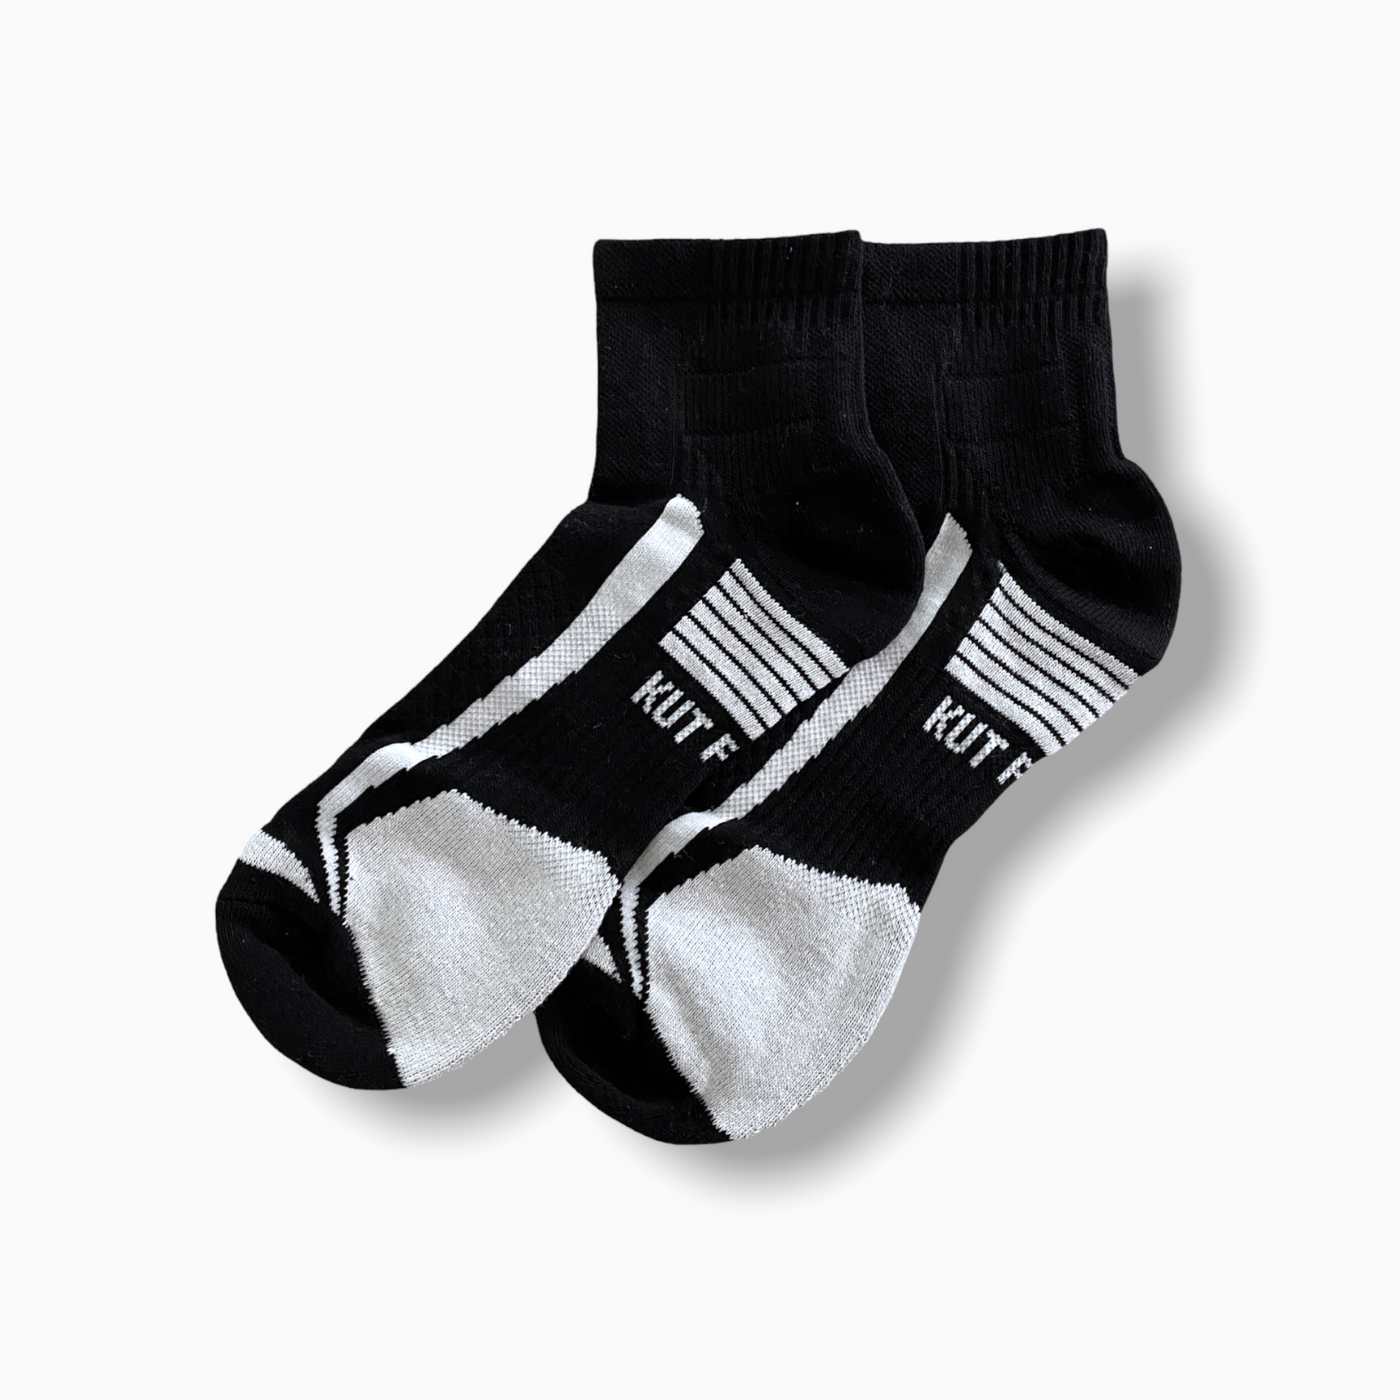 KUTFTBL™ Football Quarter Socks